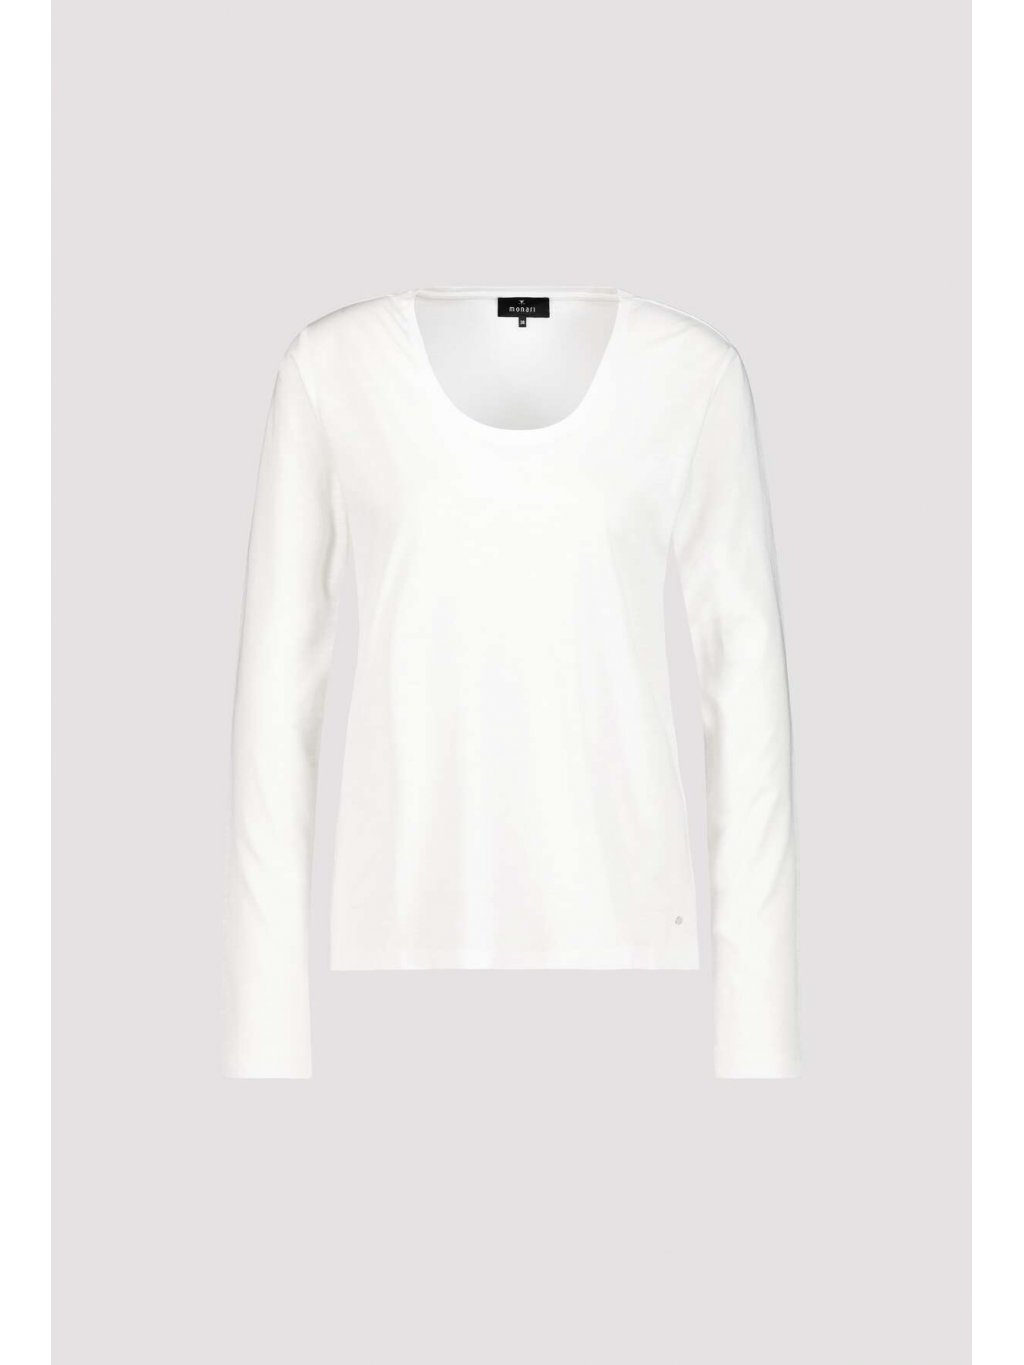 Tričko Monari 6171 bílé s dlouhým rukávem